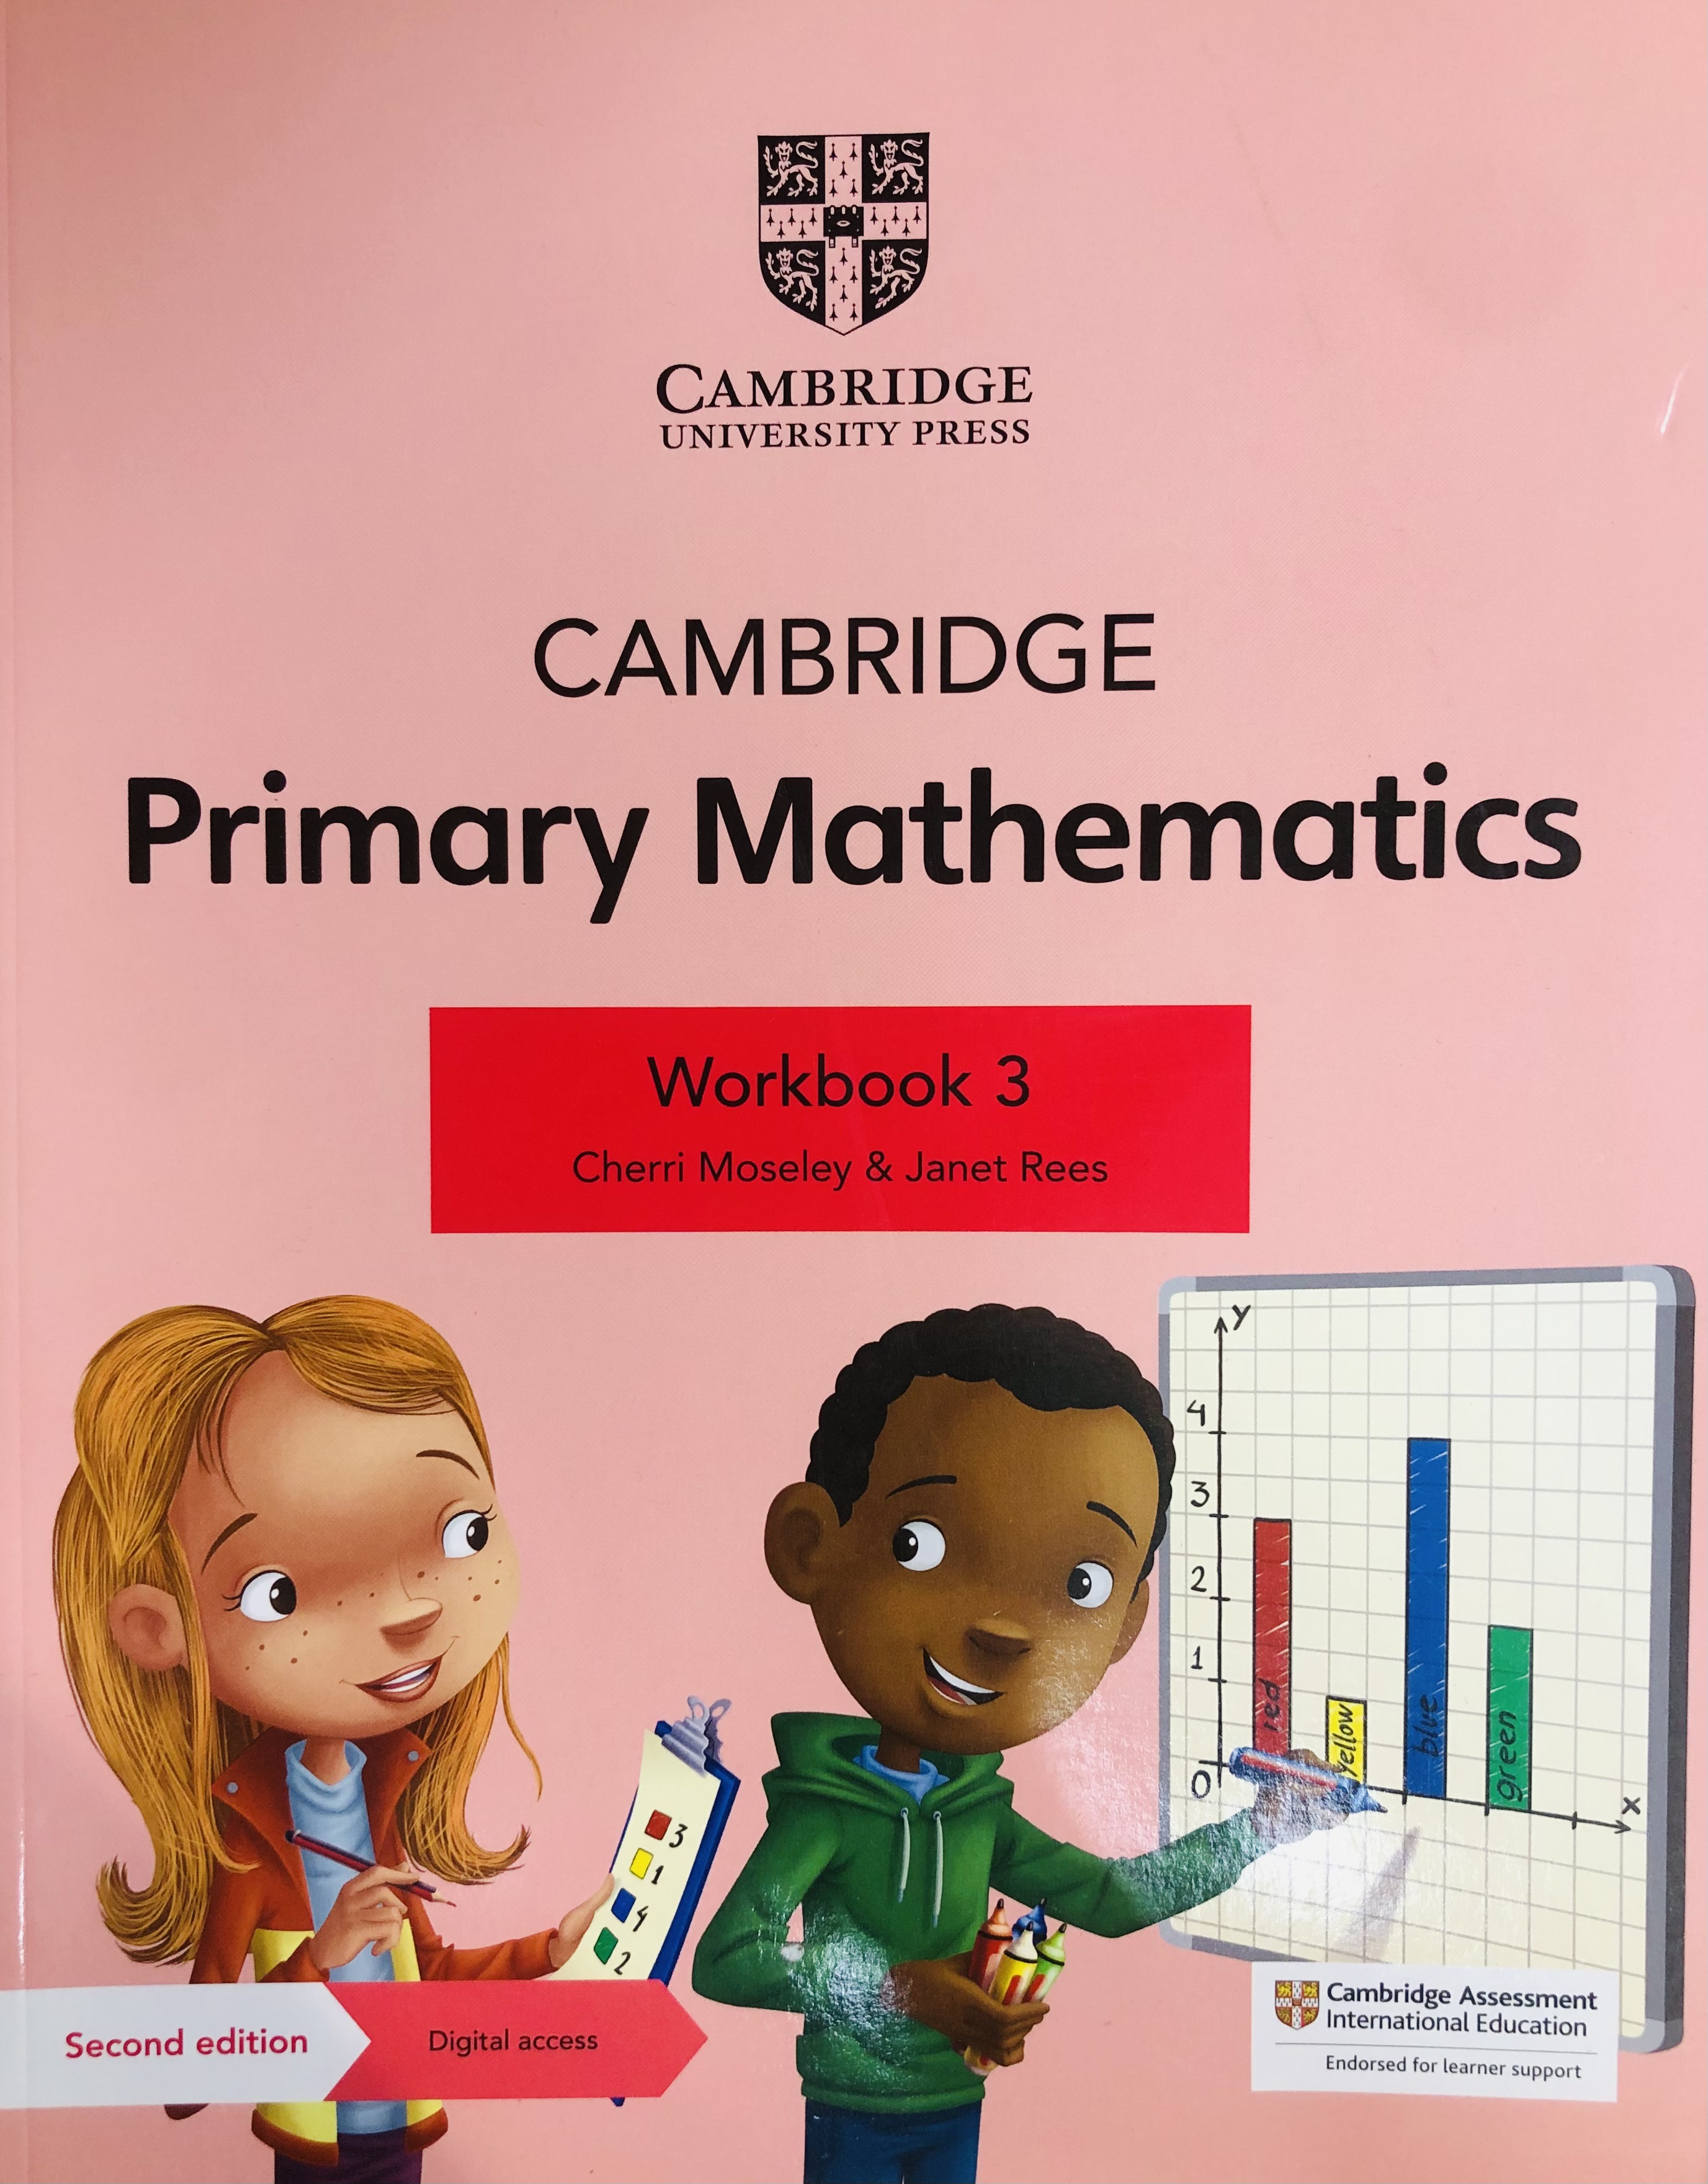 Cambridge Primary Mathematics second edition (Digital Access)